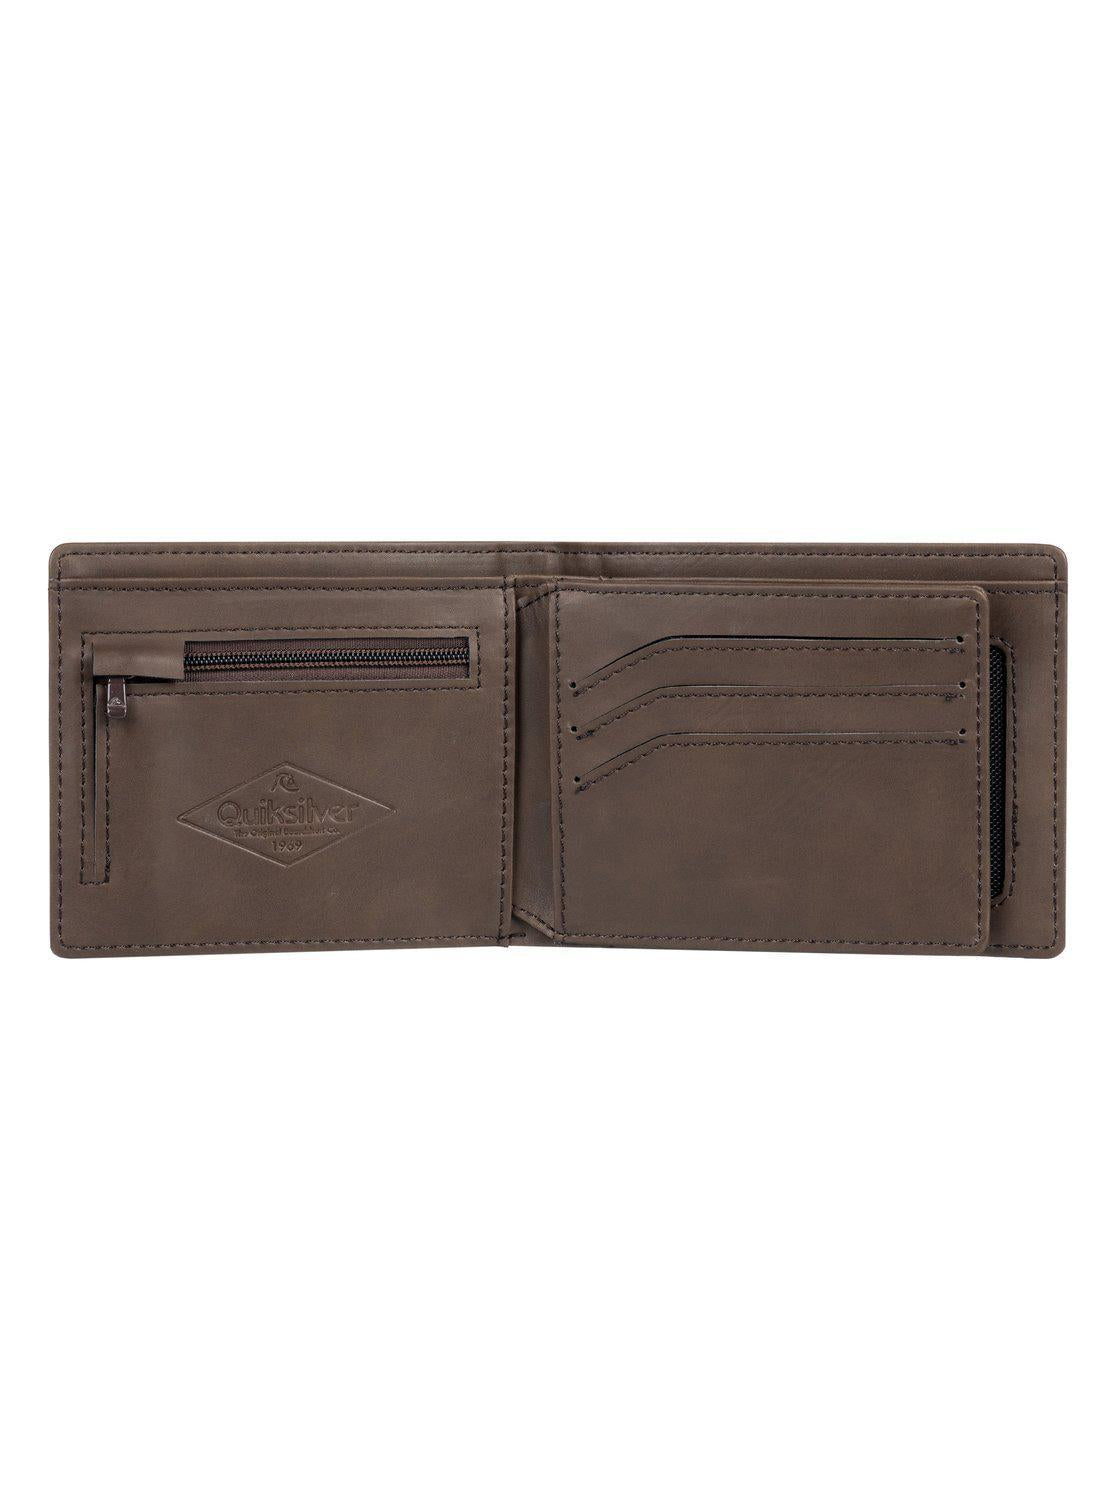 Supply Slim Bi-Fold Wallet Chocolate Brown